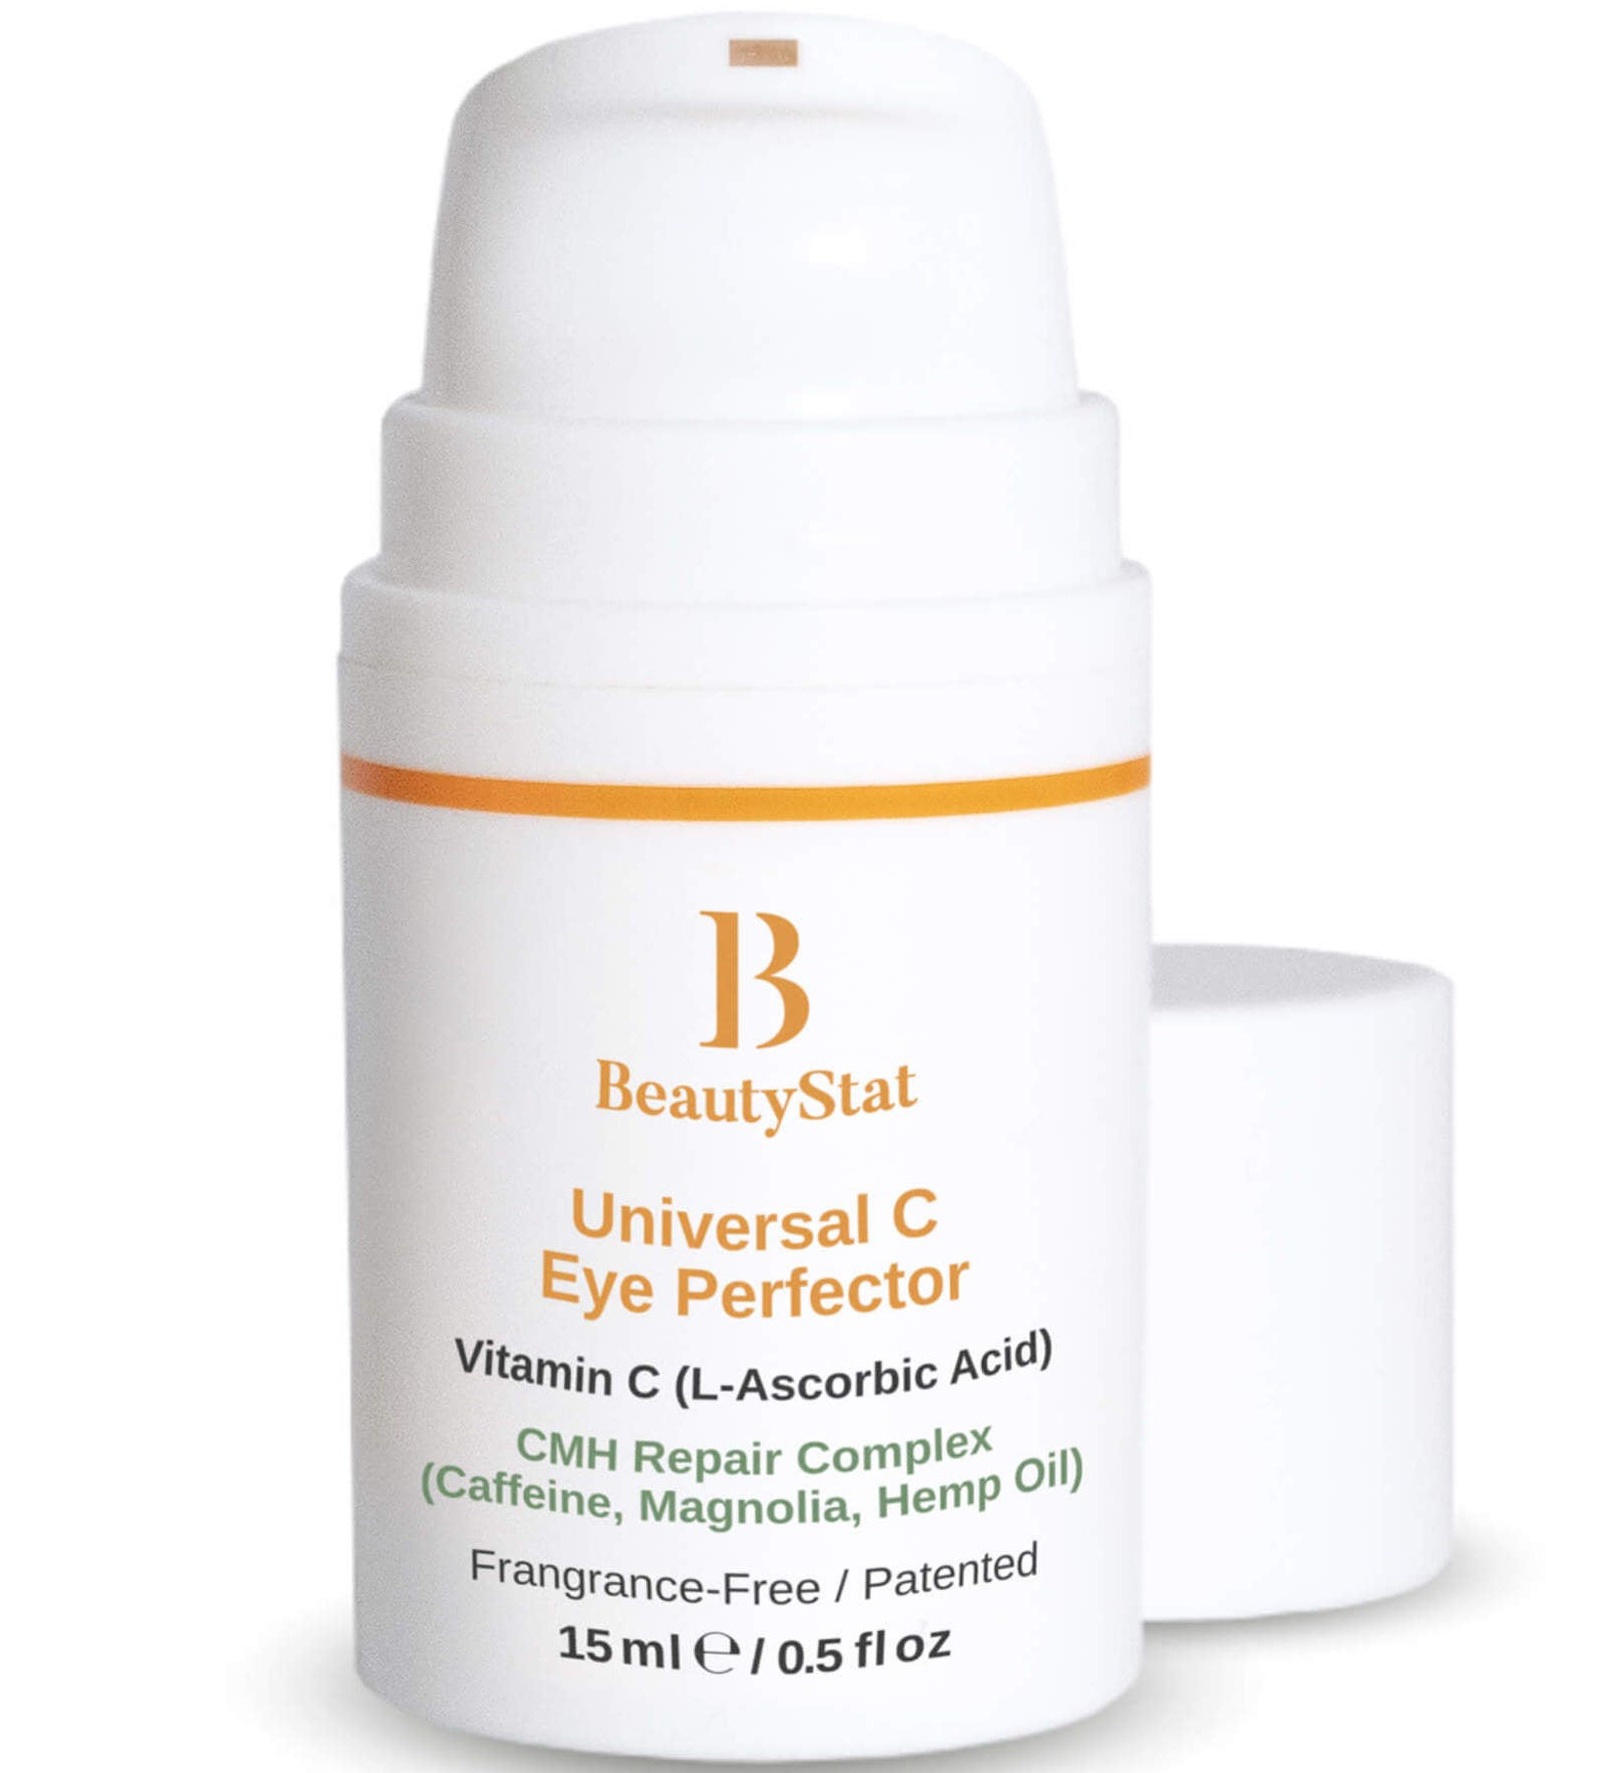 Beautystat Universal C Eye Perfector